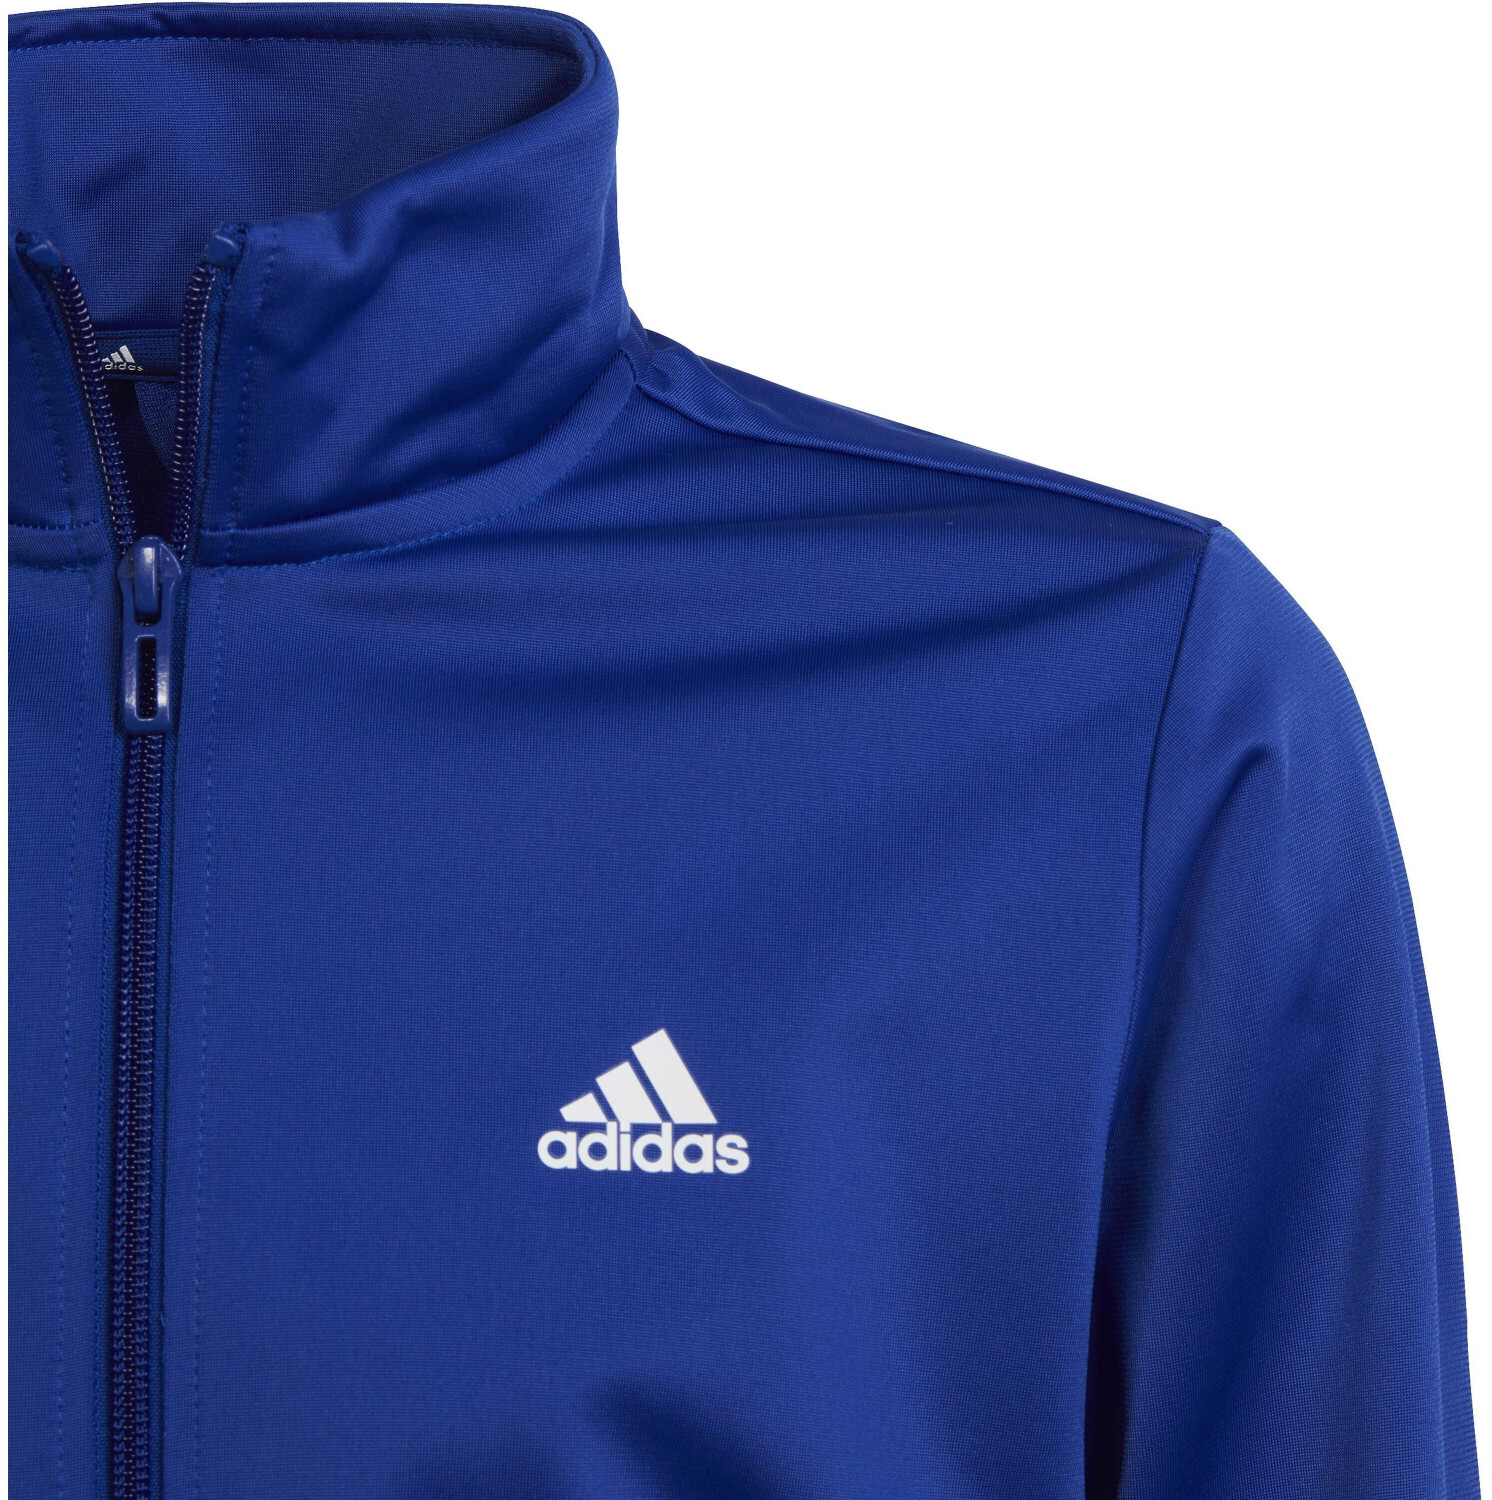 Adidas Boys Tracksuit (HR6408) € ab ink blue/white/legend 34,49 semi bei lucid | Preisvergleich